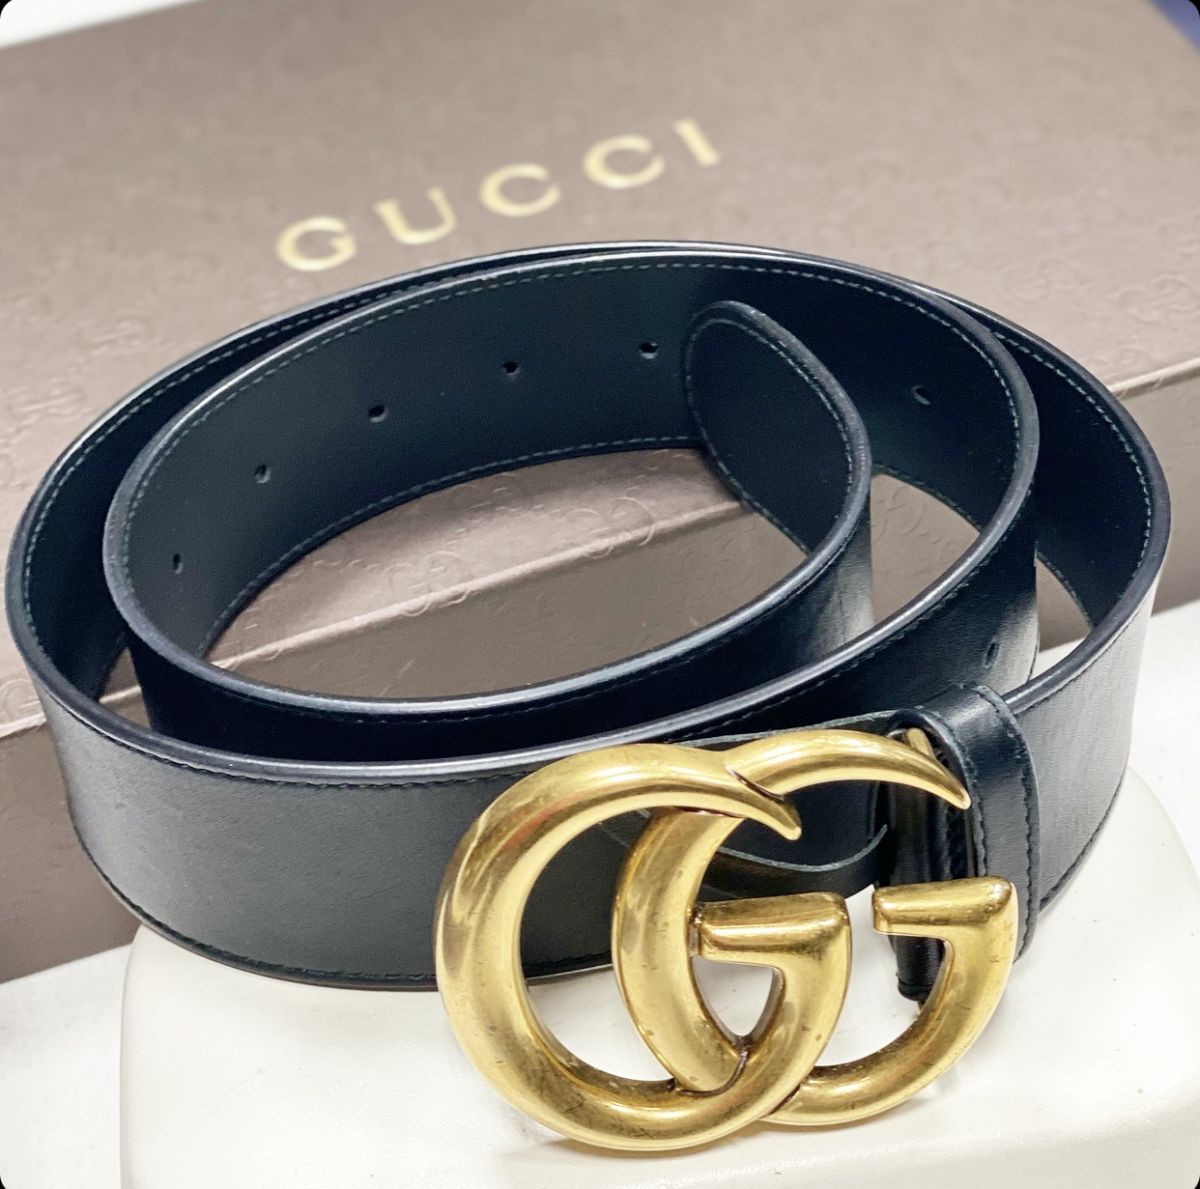 Ремень Gucci размер 85/34 цена 18 463 руб 